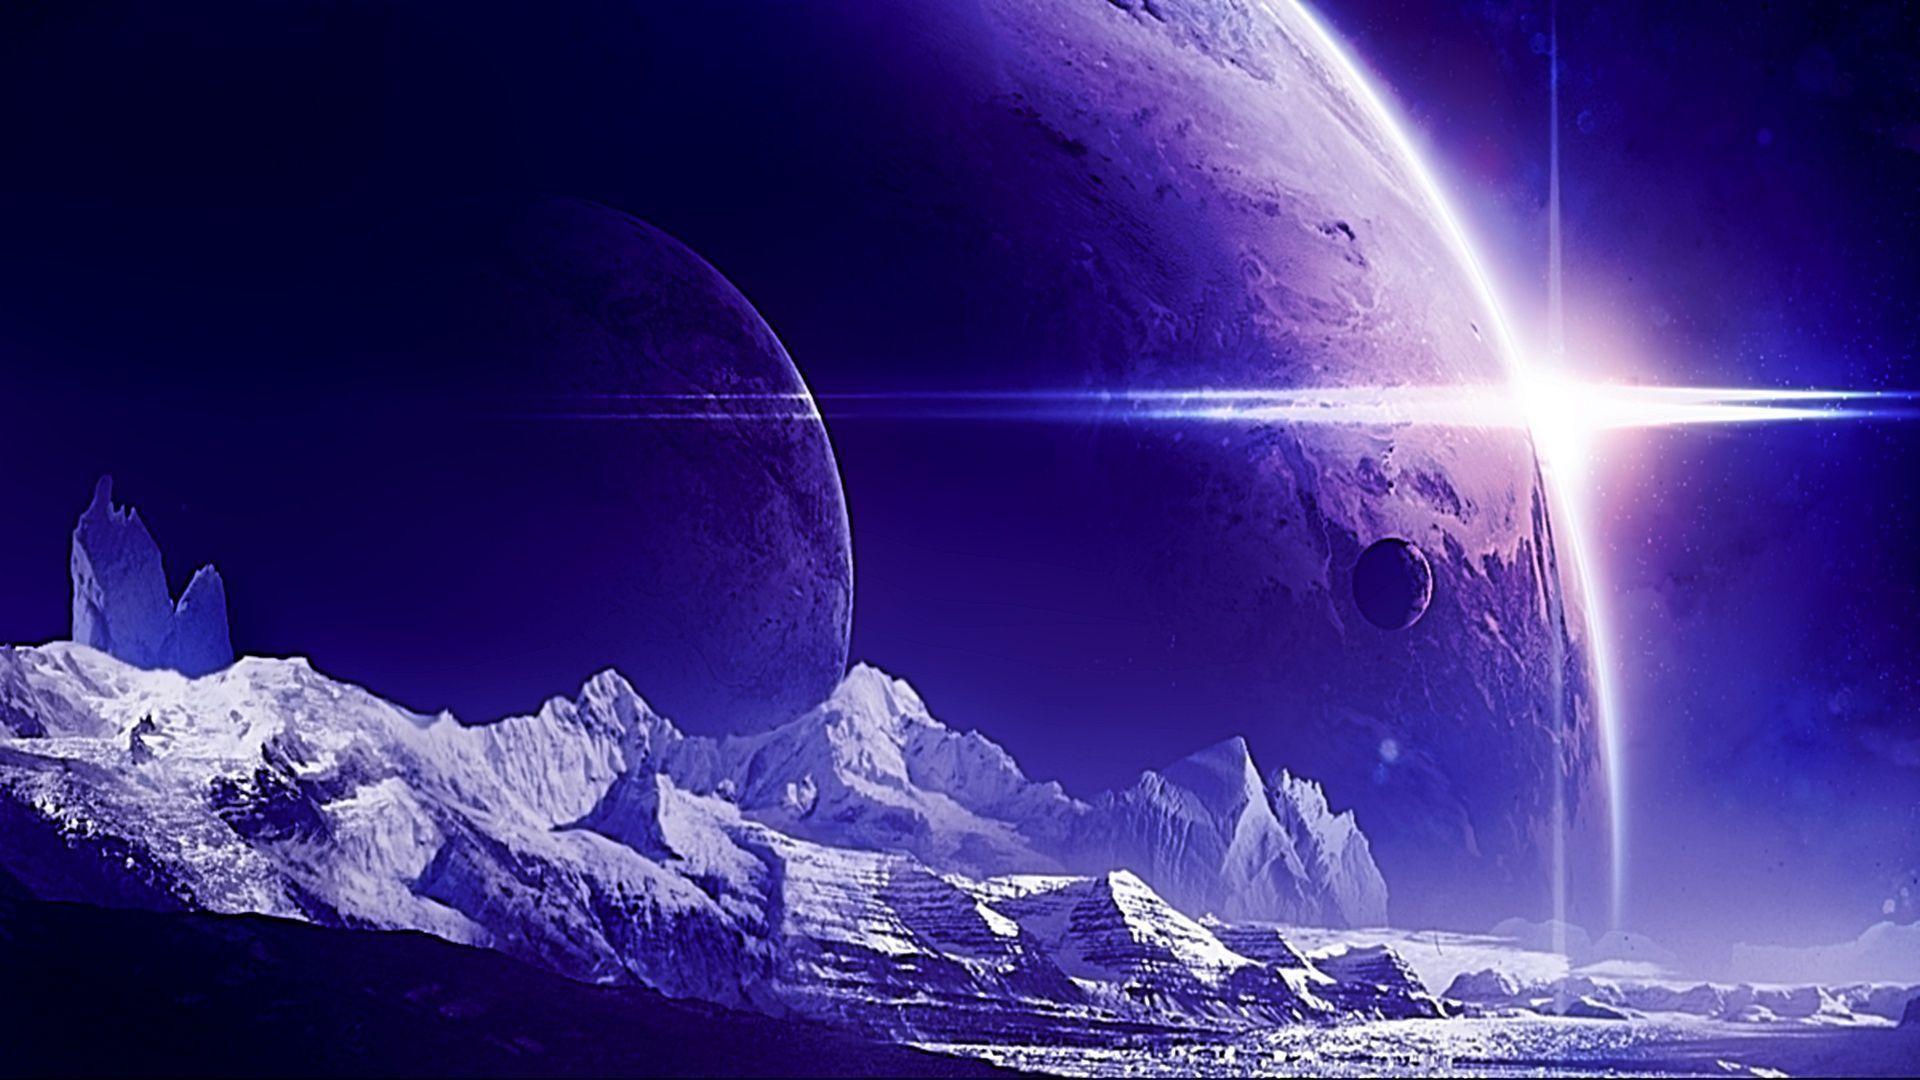 Wallpaper space fantasy art stars planet austronaut images for  desktop section космос  download